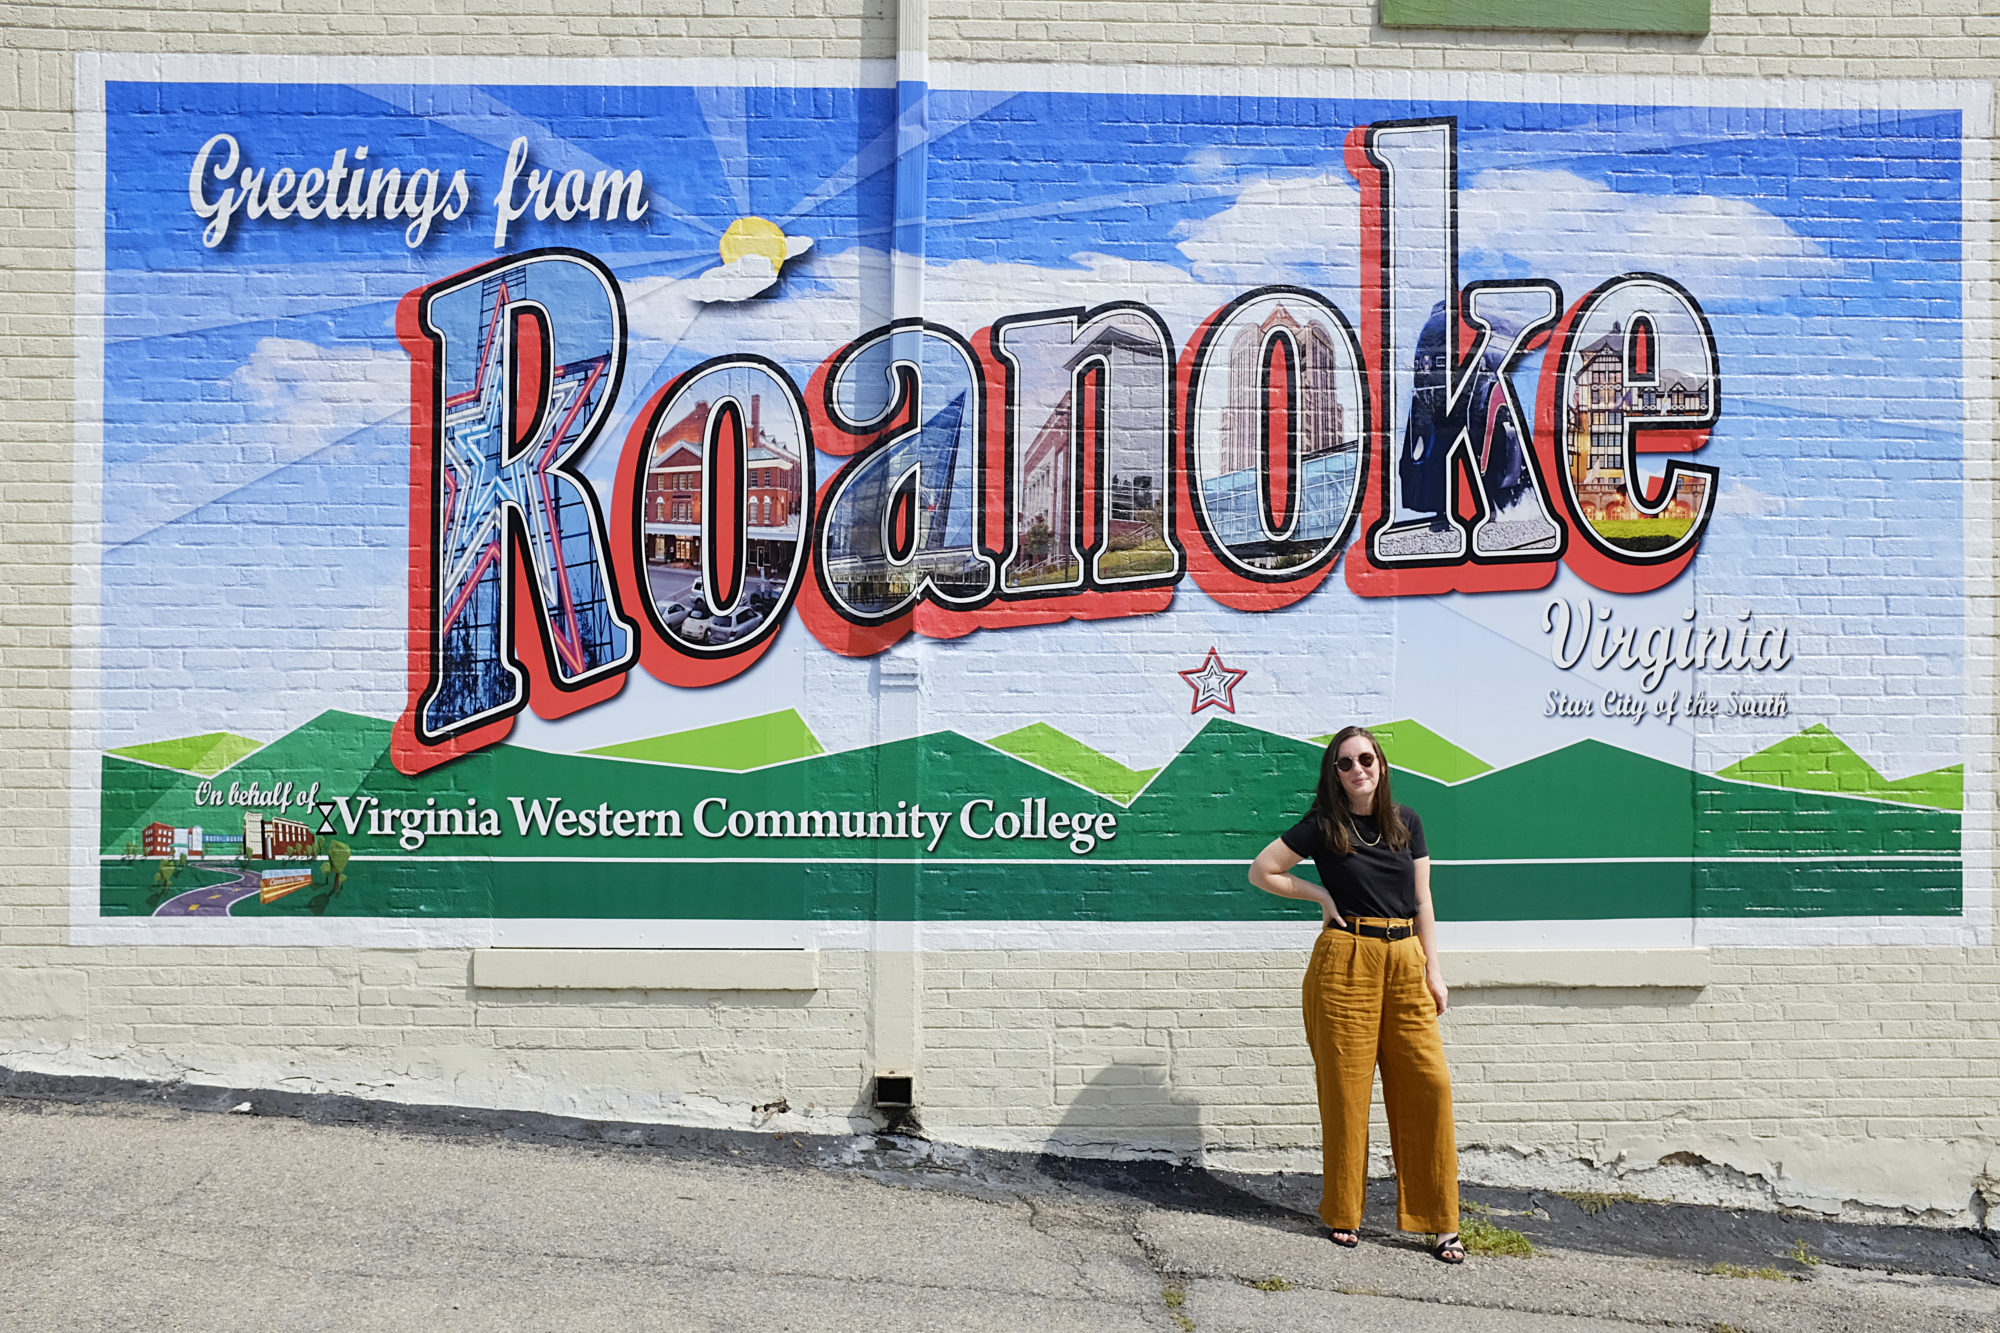 Alyssa stands in front of the Roanoke sign